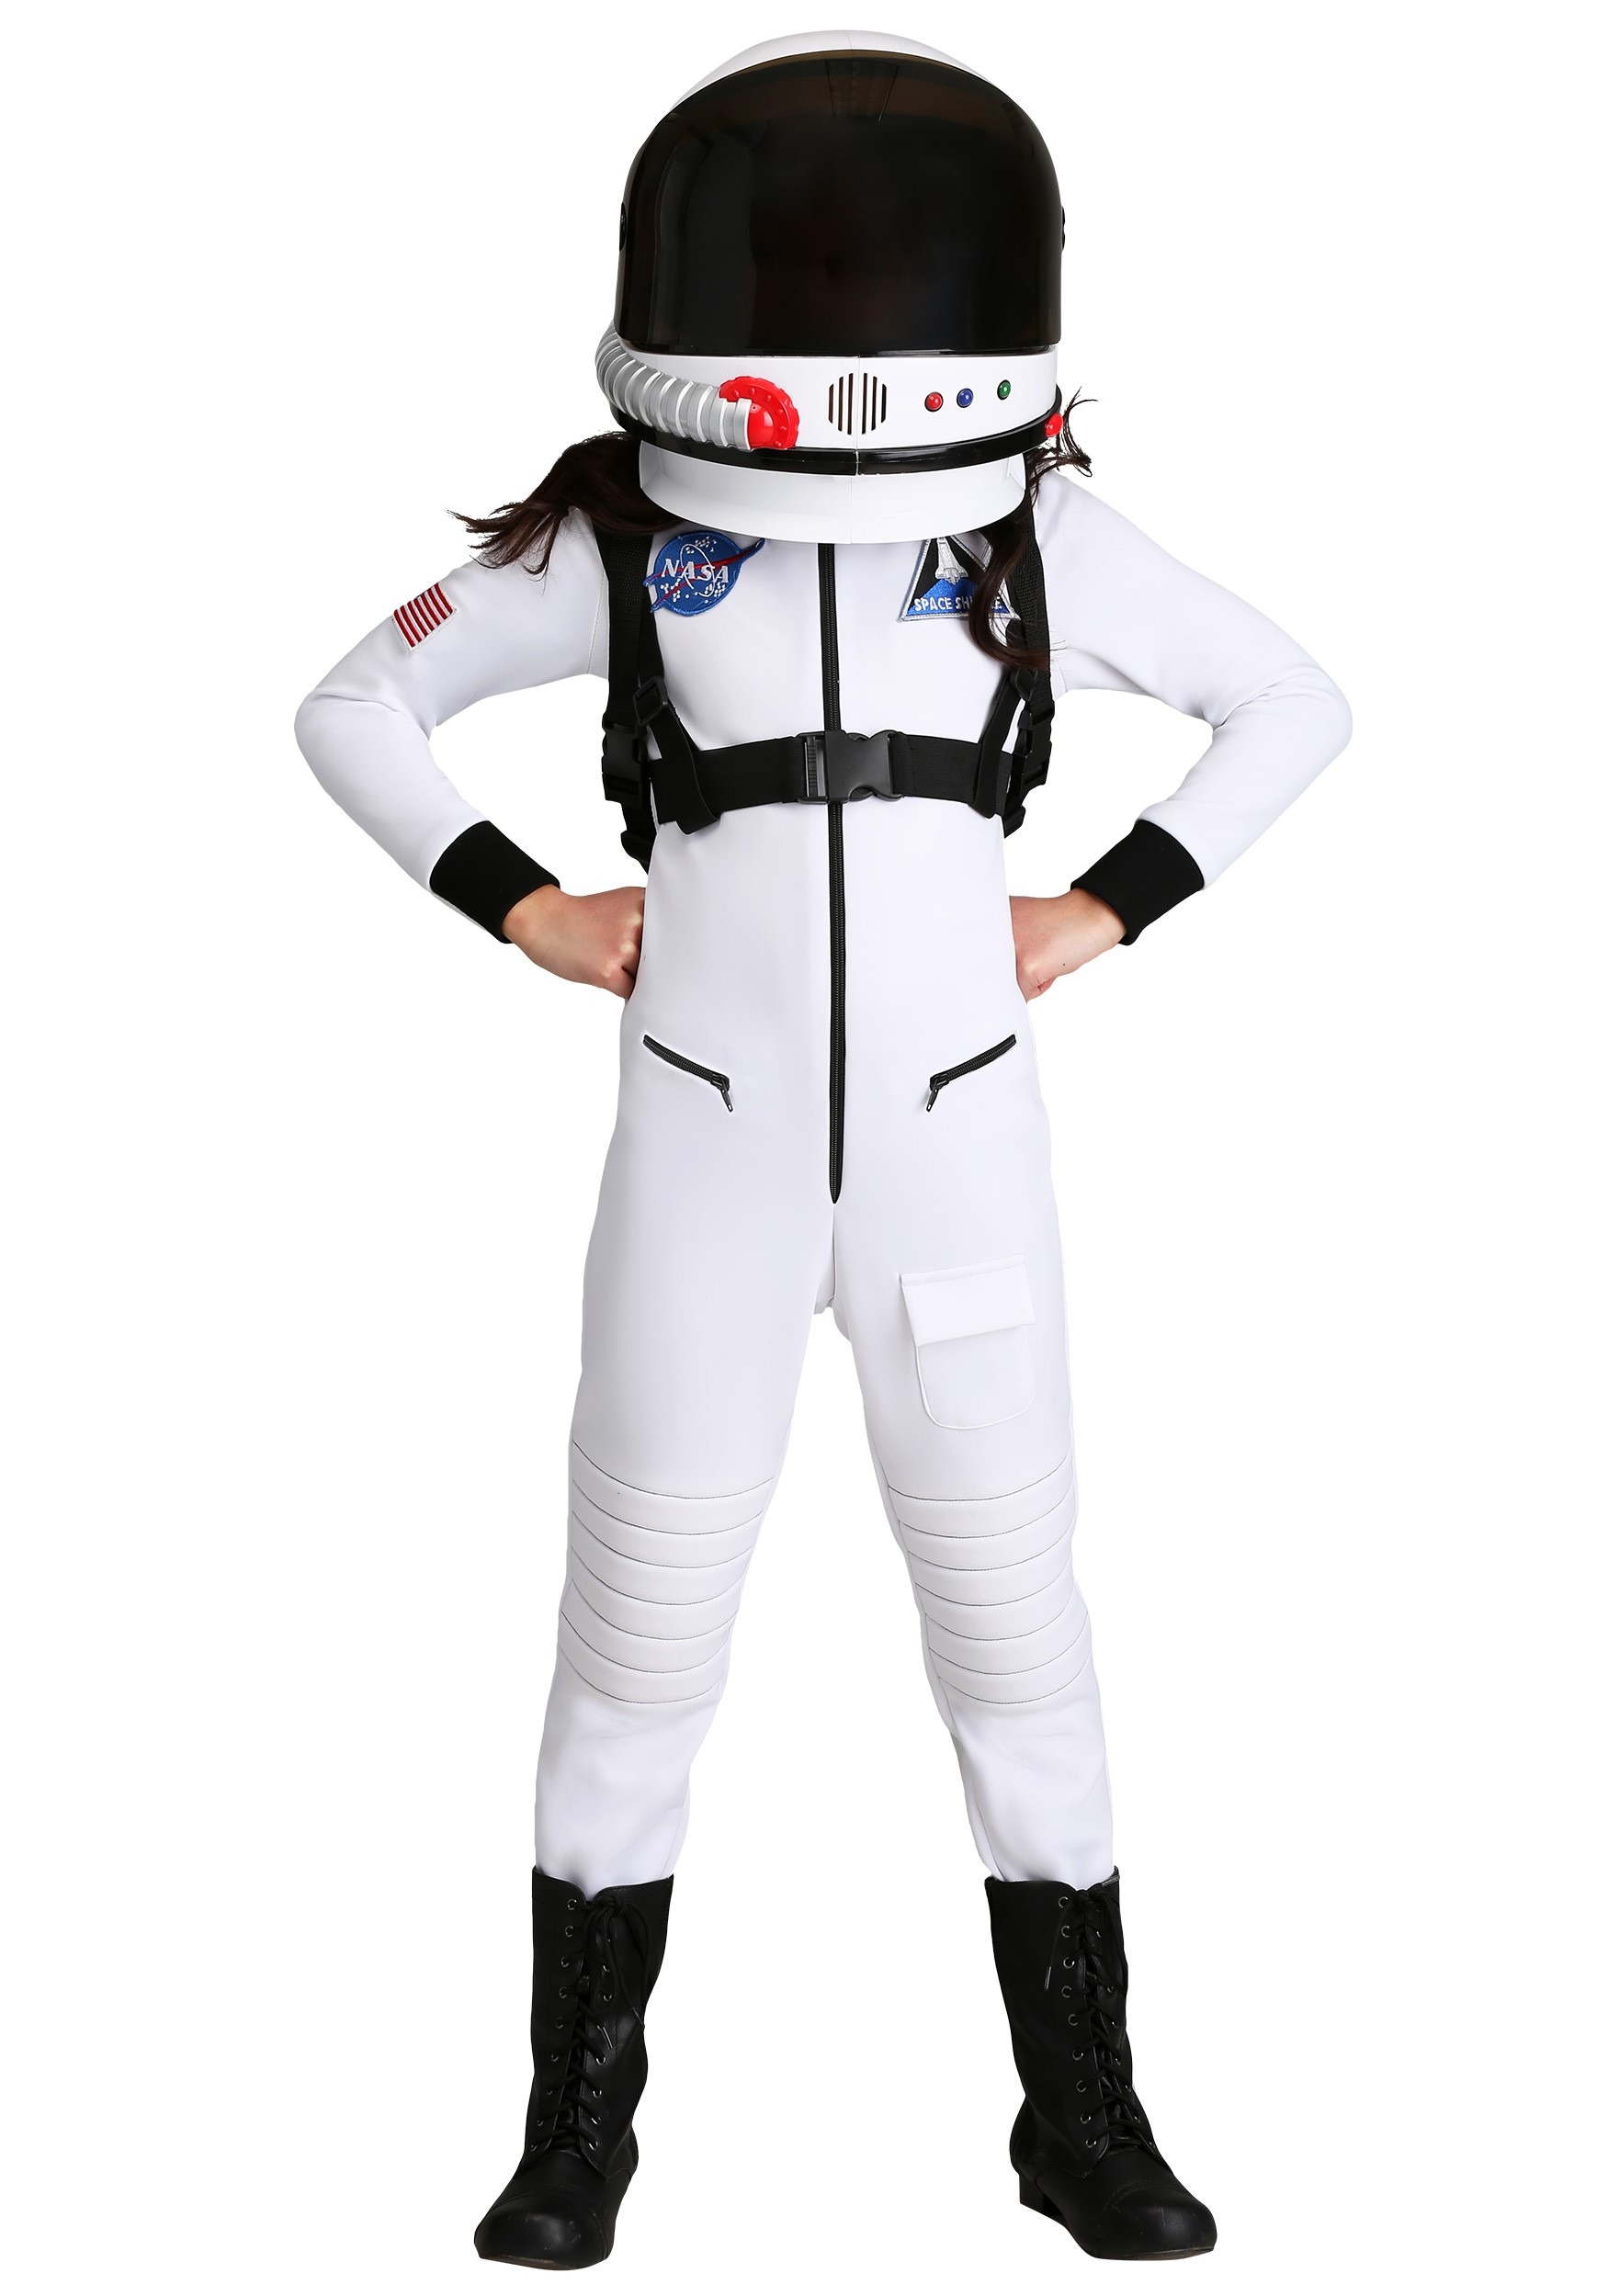 White Astronaut Costume For Girls